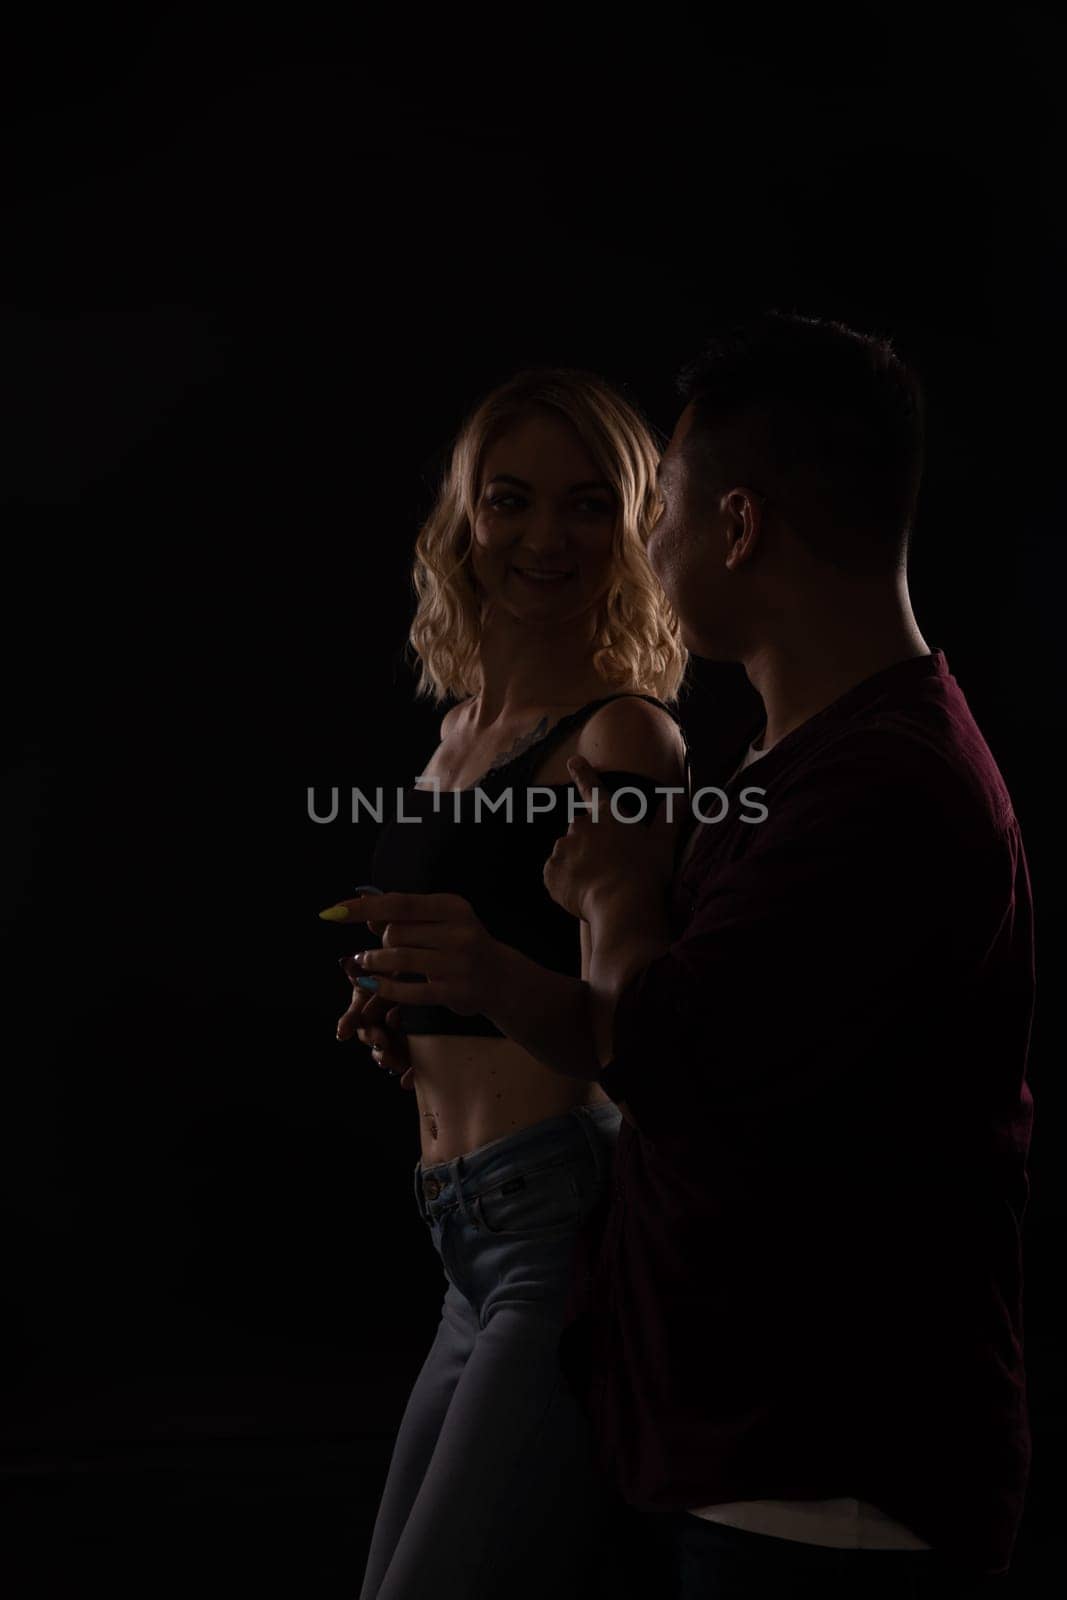 Man and woman dancers in dark